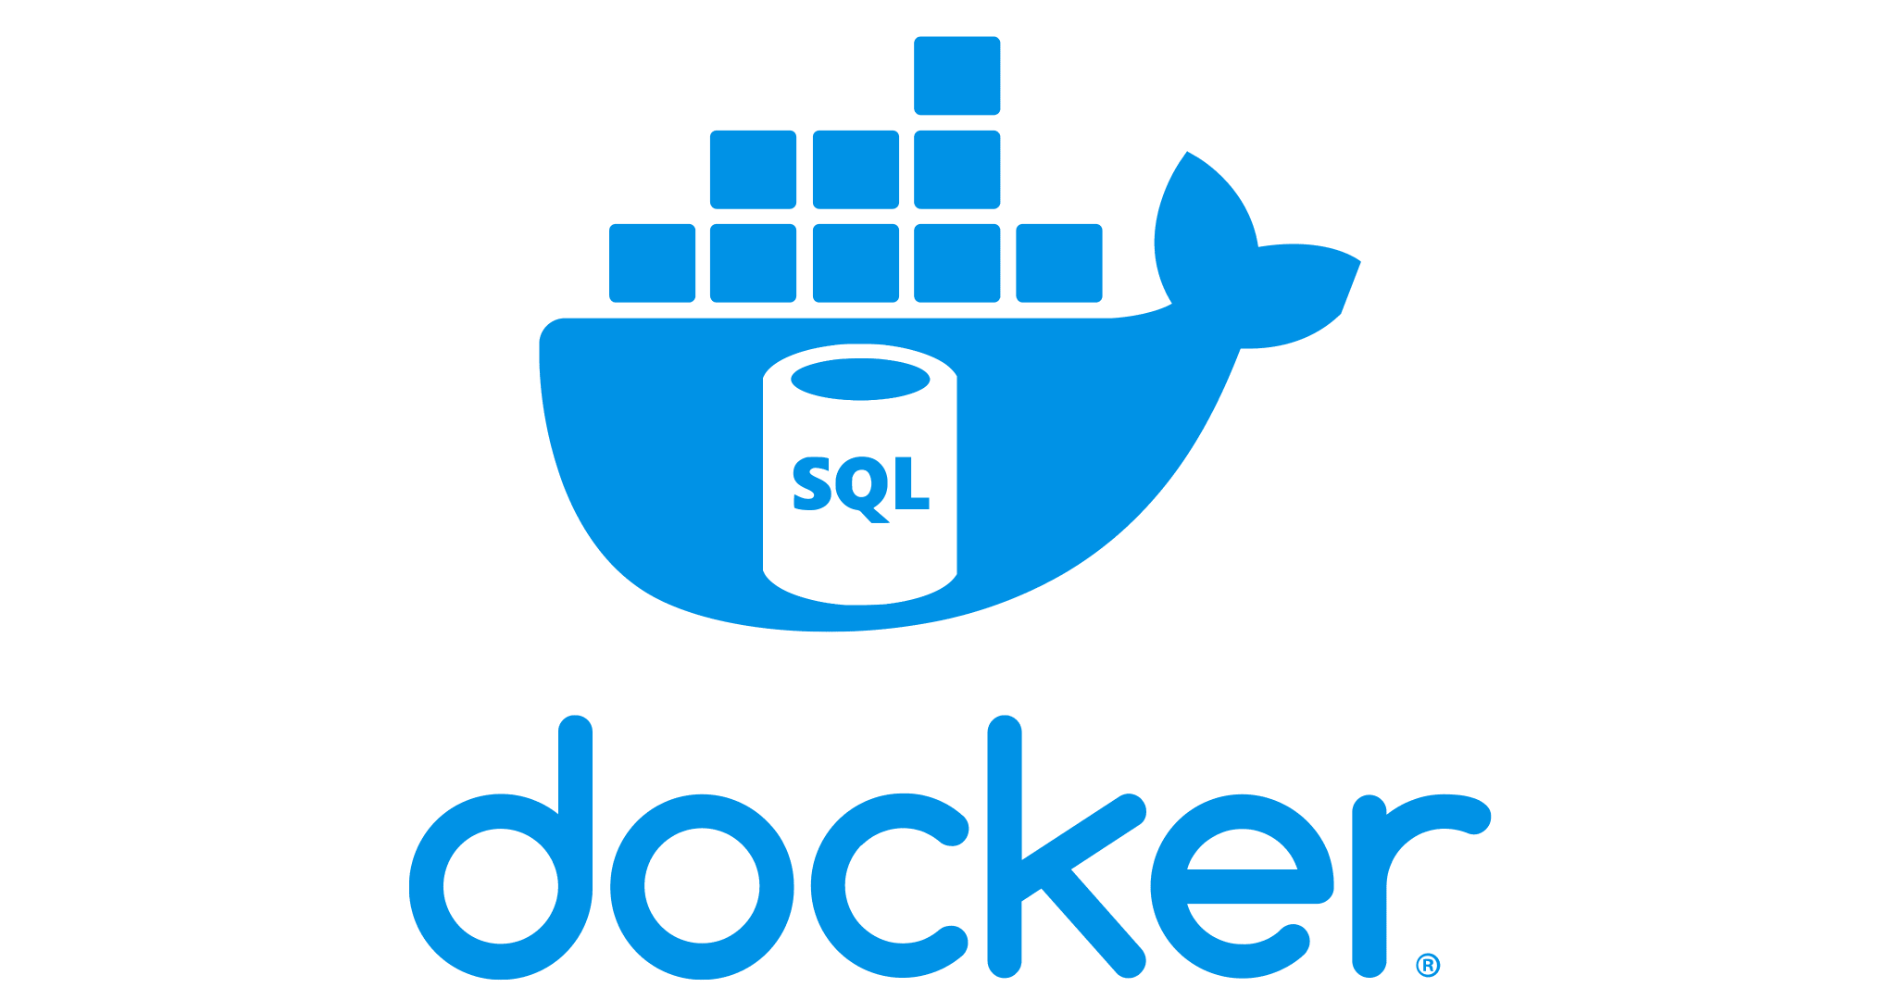 Running SQL Server on macOS silicon using Docker